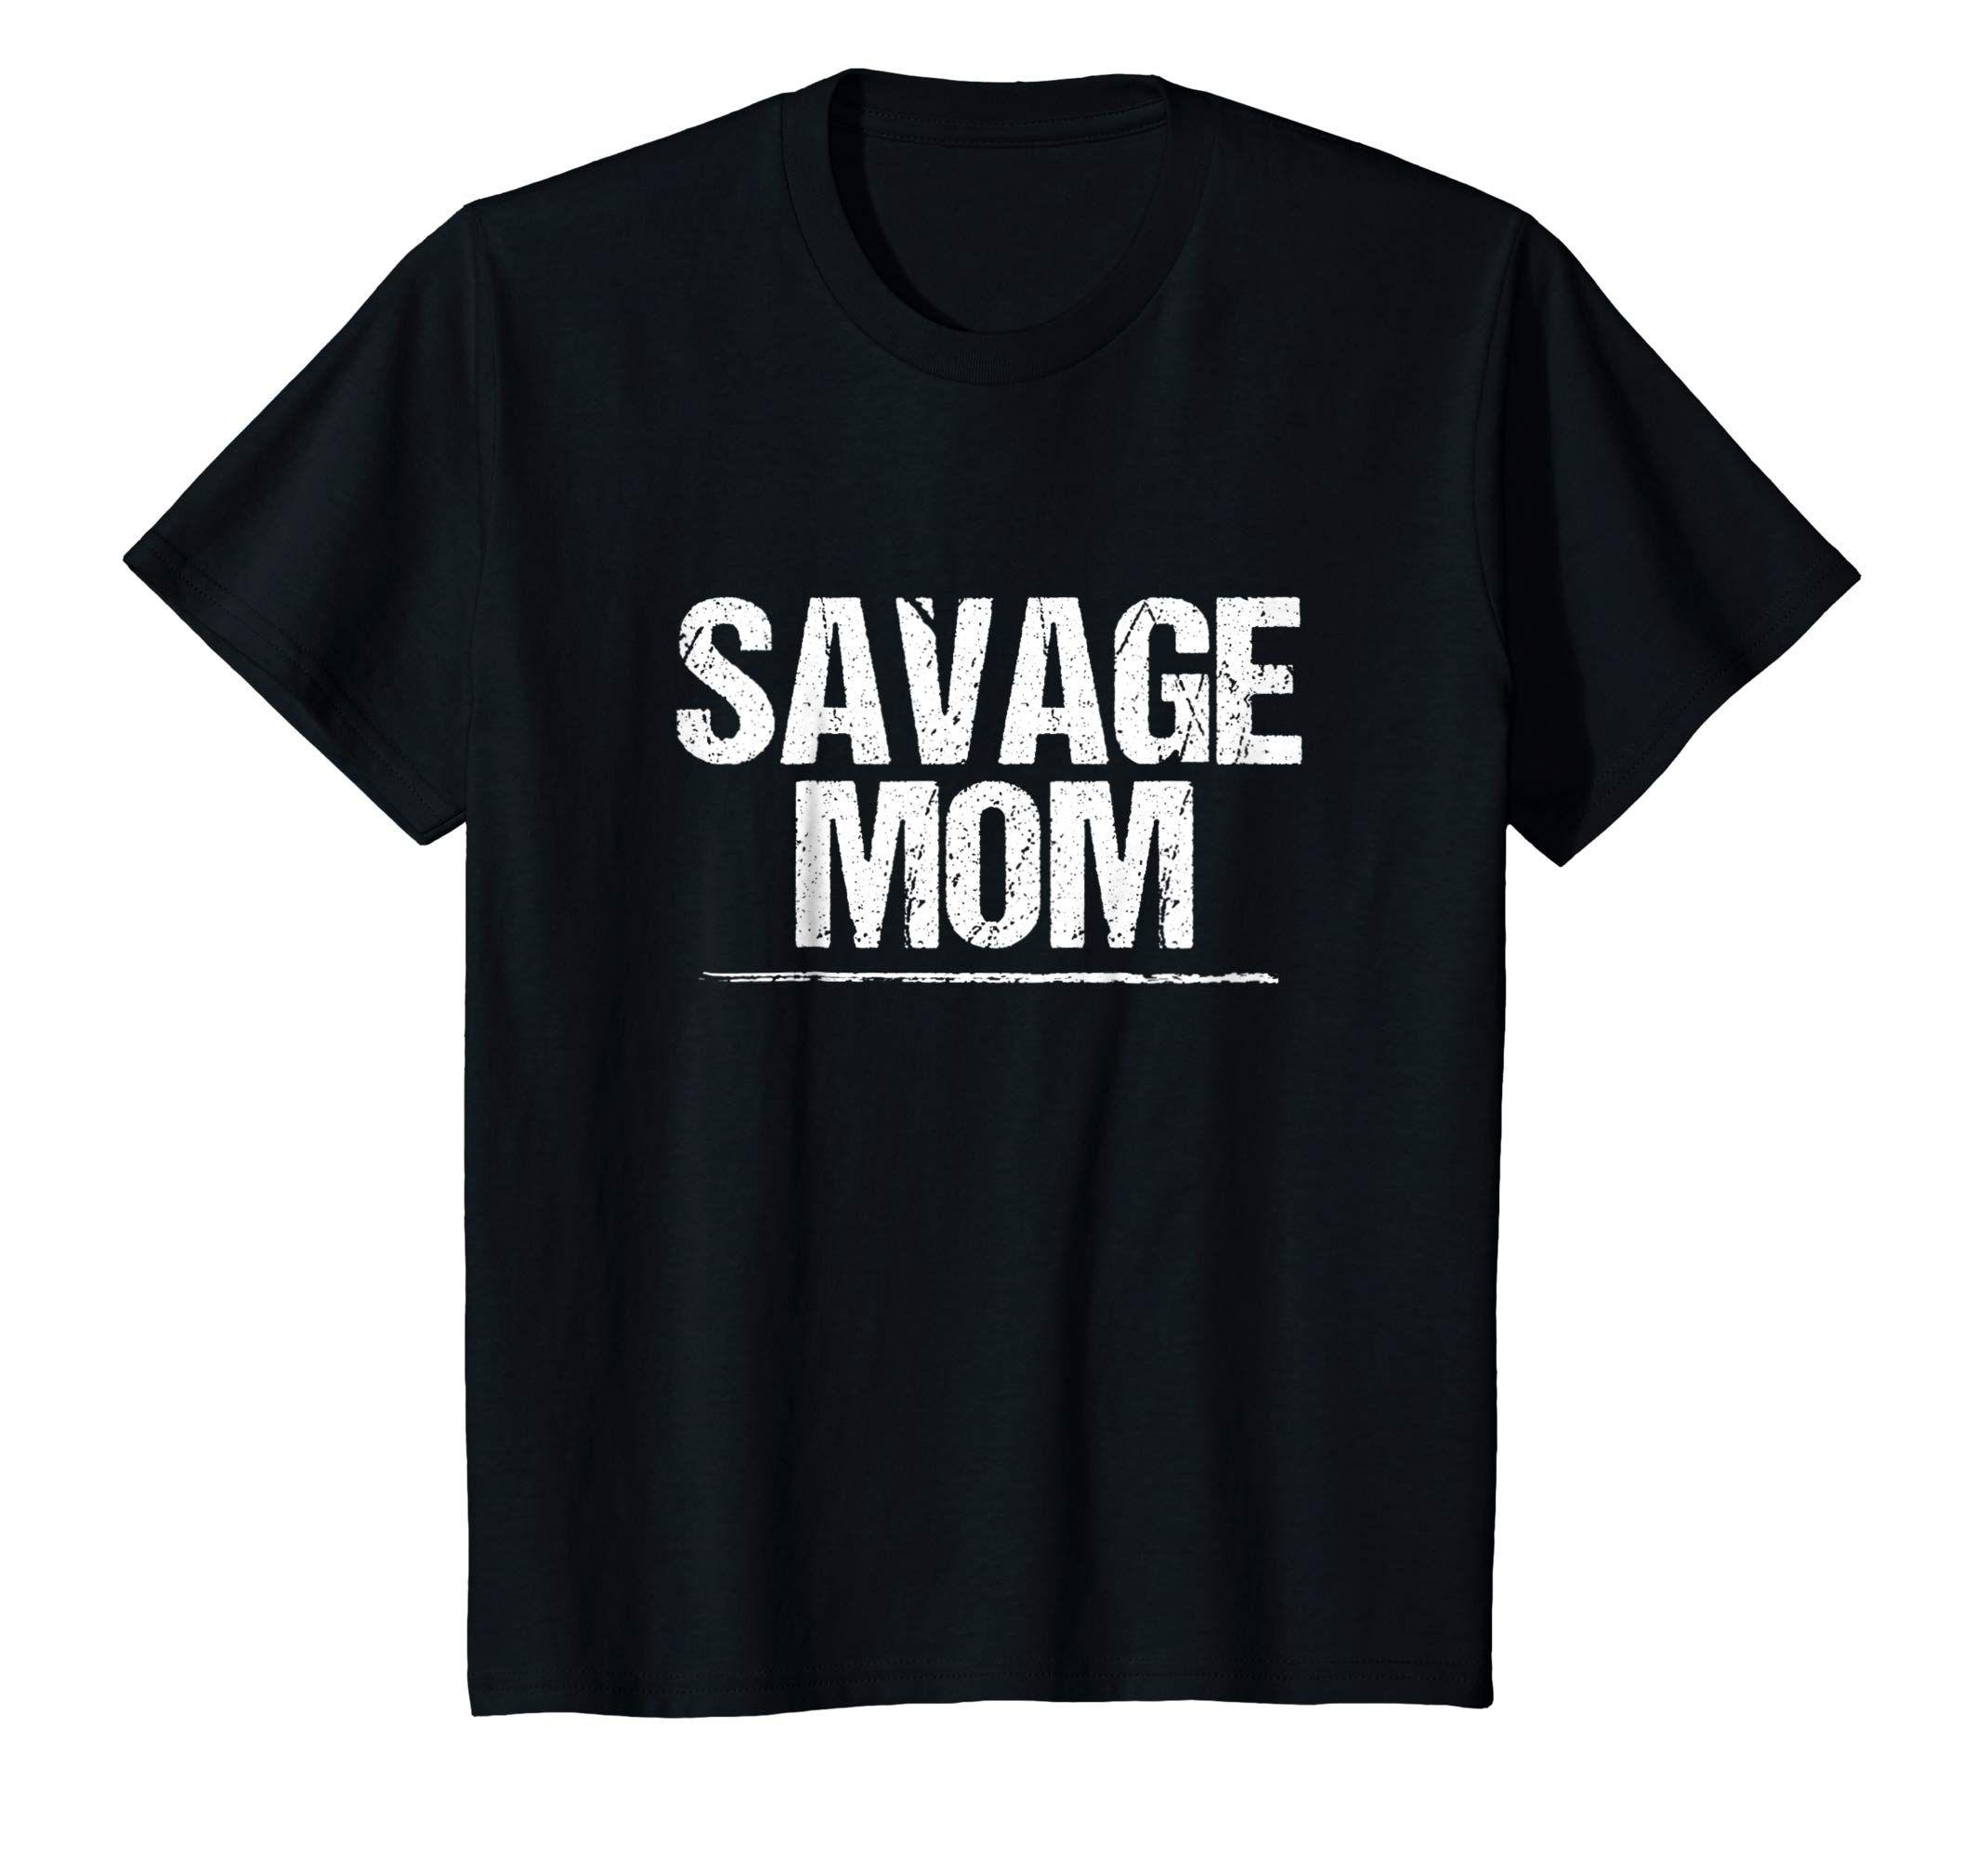 Crazzy Savage Logo - Amazon.com: Savage Mom T-Shirt Sarcastic Apparel Crazy Lady Wear ...